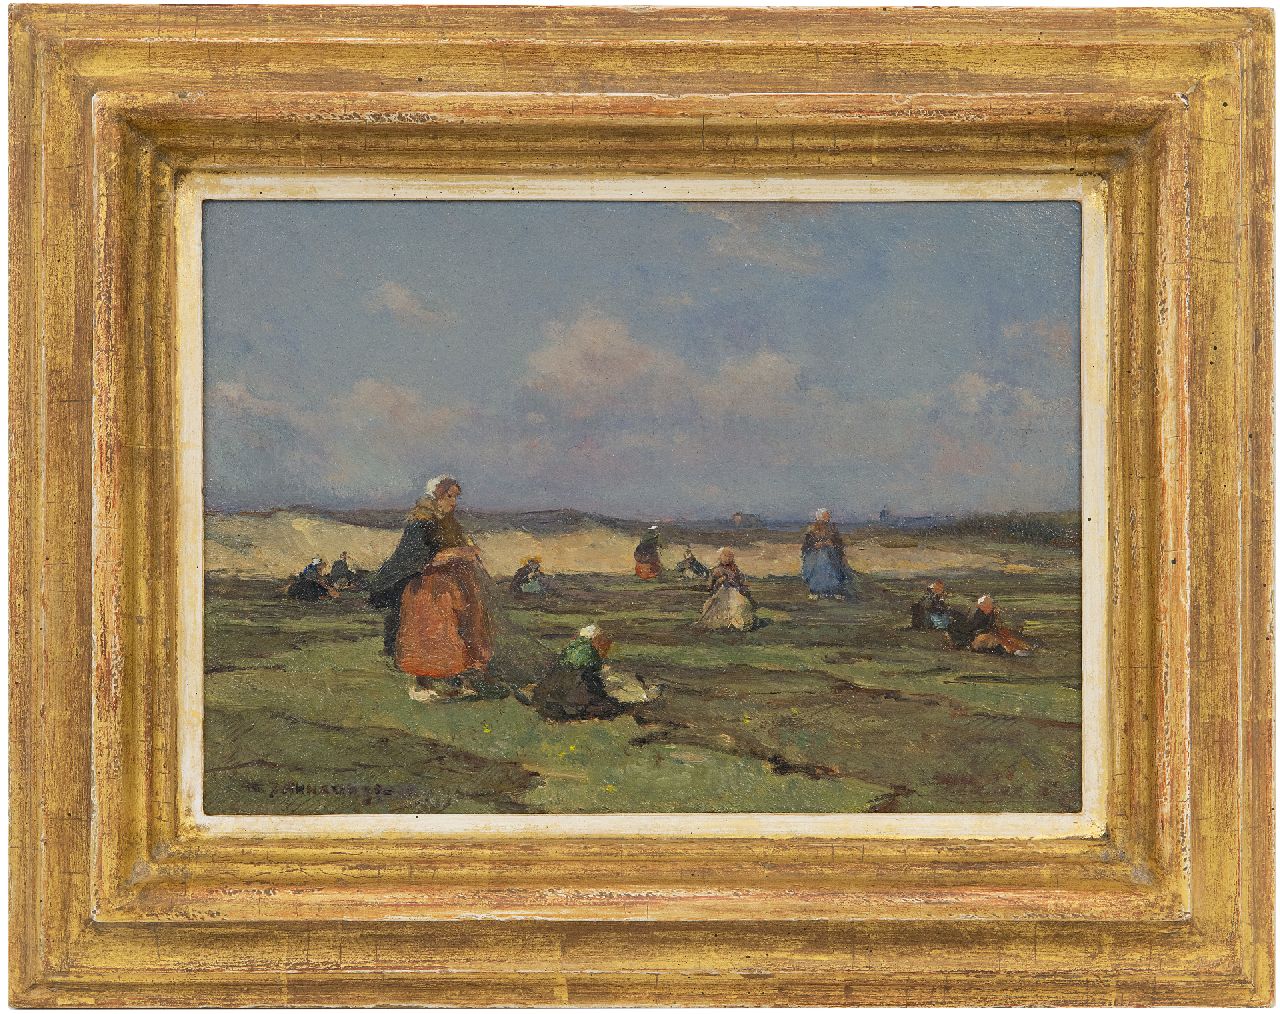 Akkeringa J.E.H.  | 'Johannes Evert' Hendrik Akkeringa, Mending fishing nets in the dunes, oil on panel 17.2 x 24.3 cm, signed l.l.